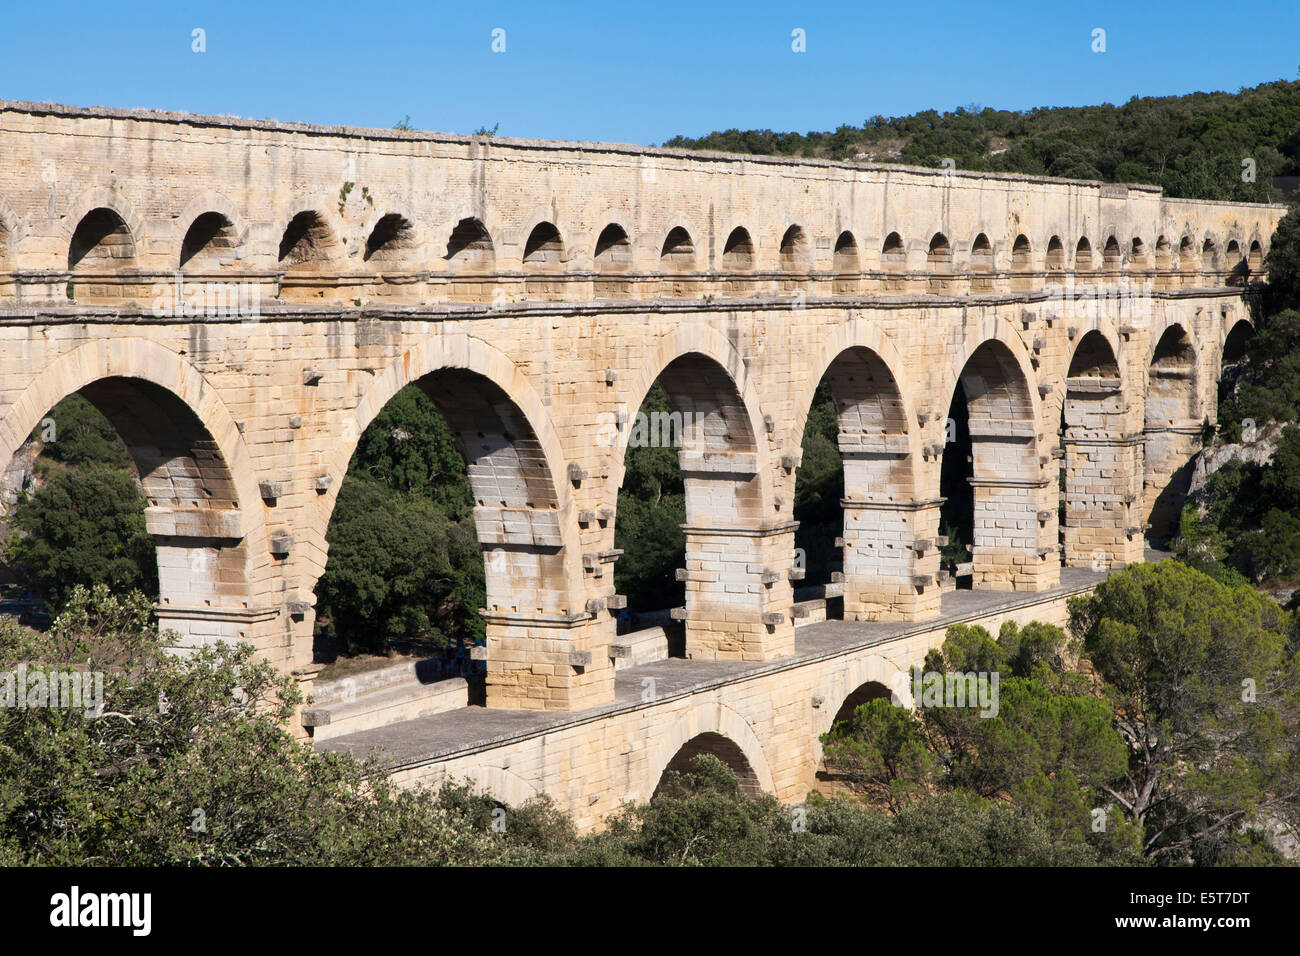 Ancien aqueduc romain de Nîmes, Pont du Gard, France. Banque D'Images